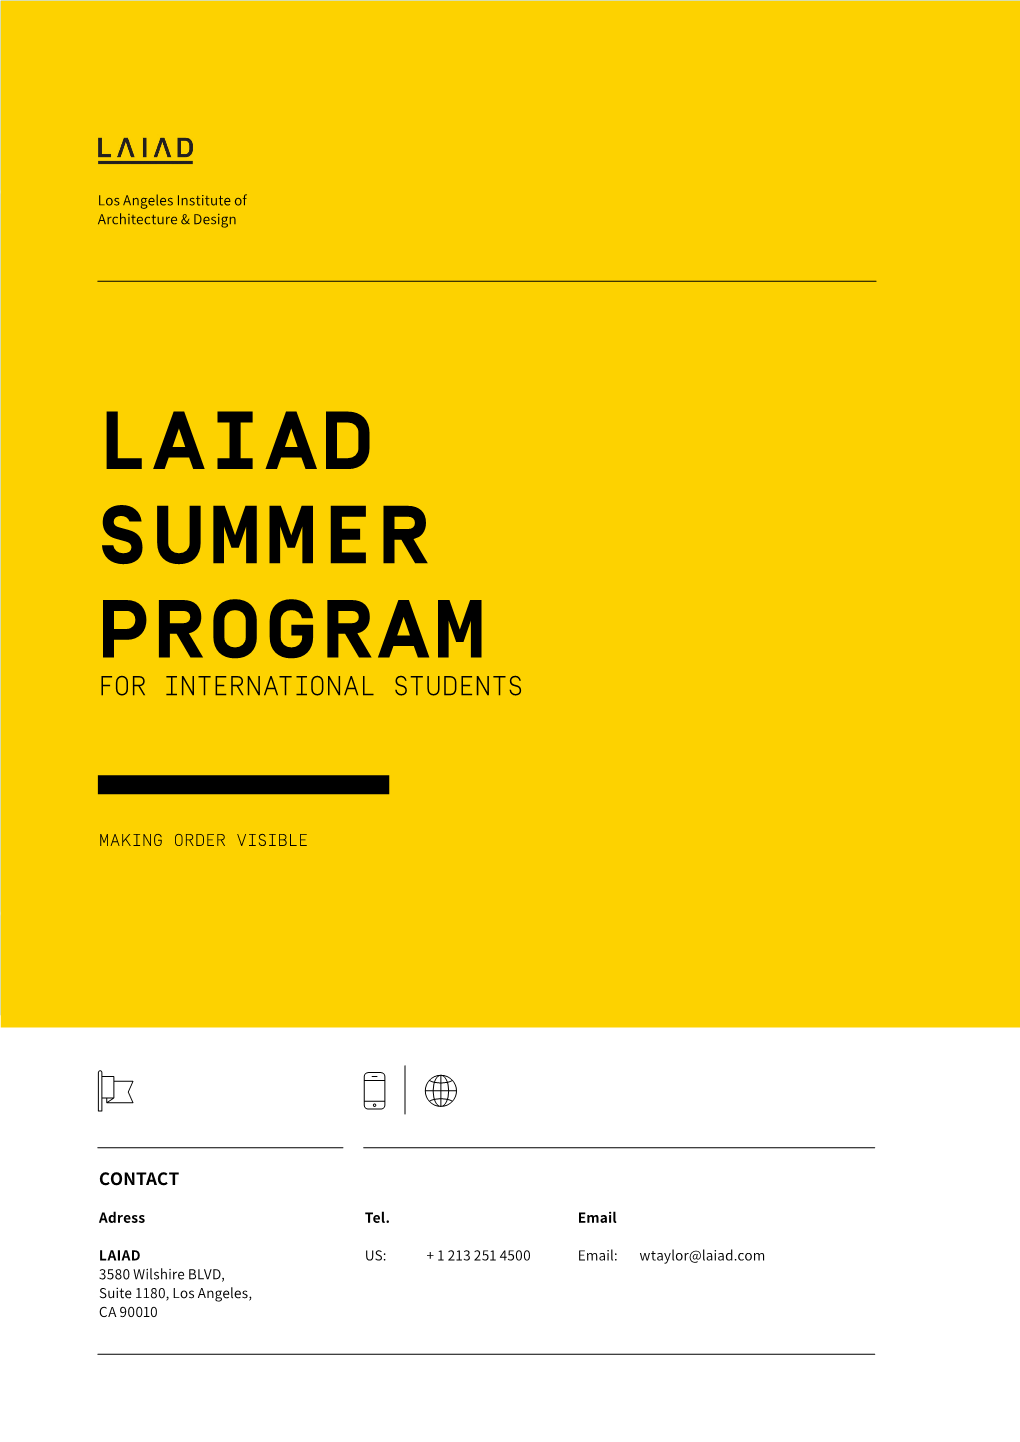 Laiad Summer Program for International Students